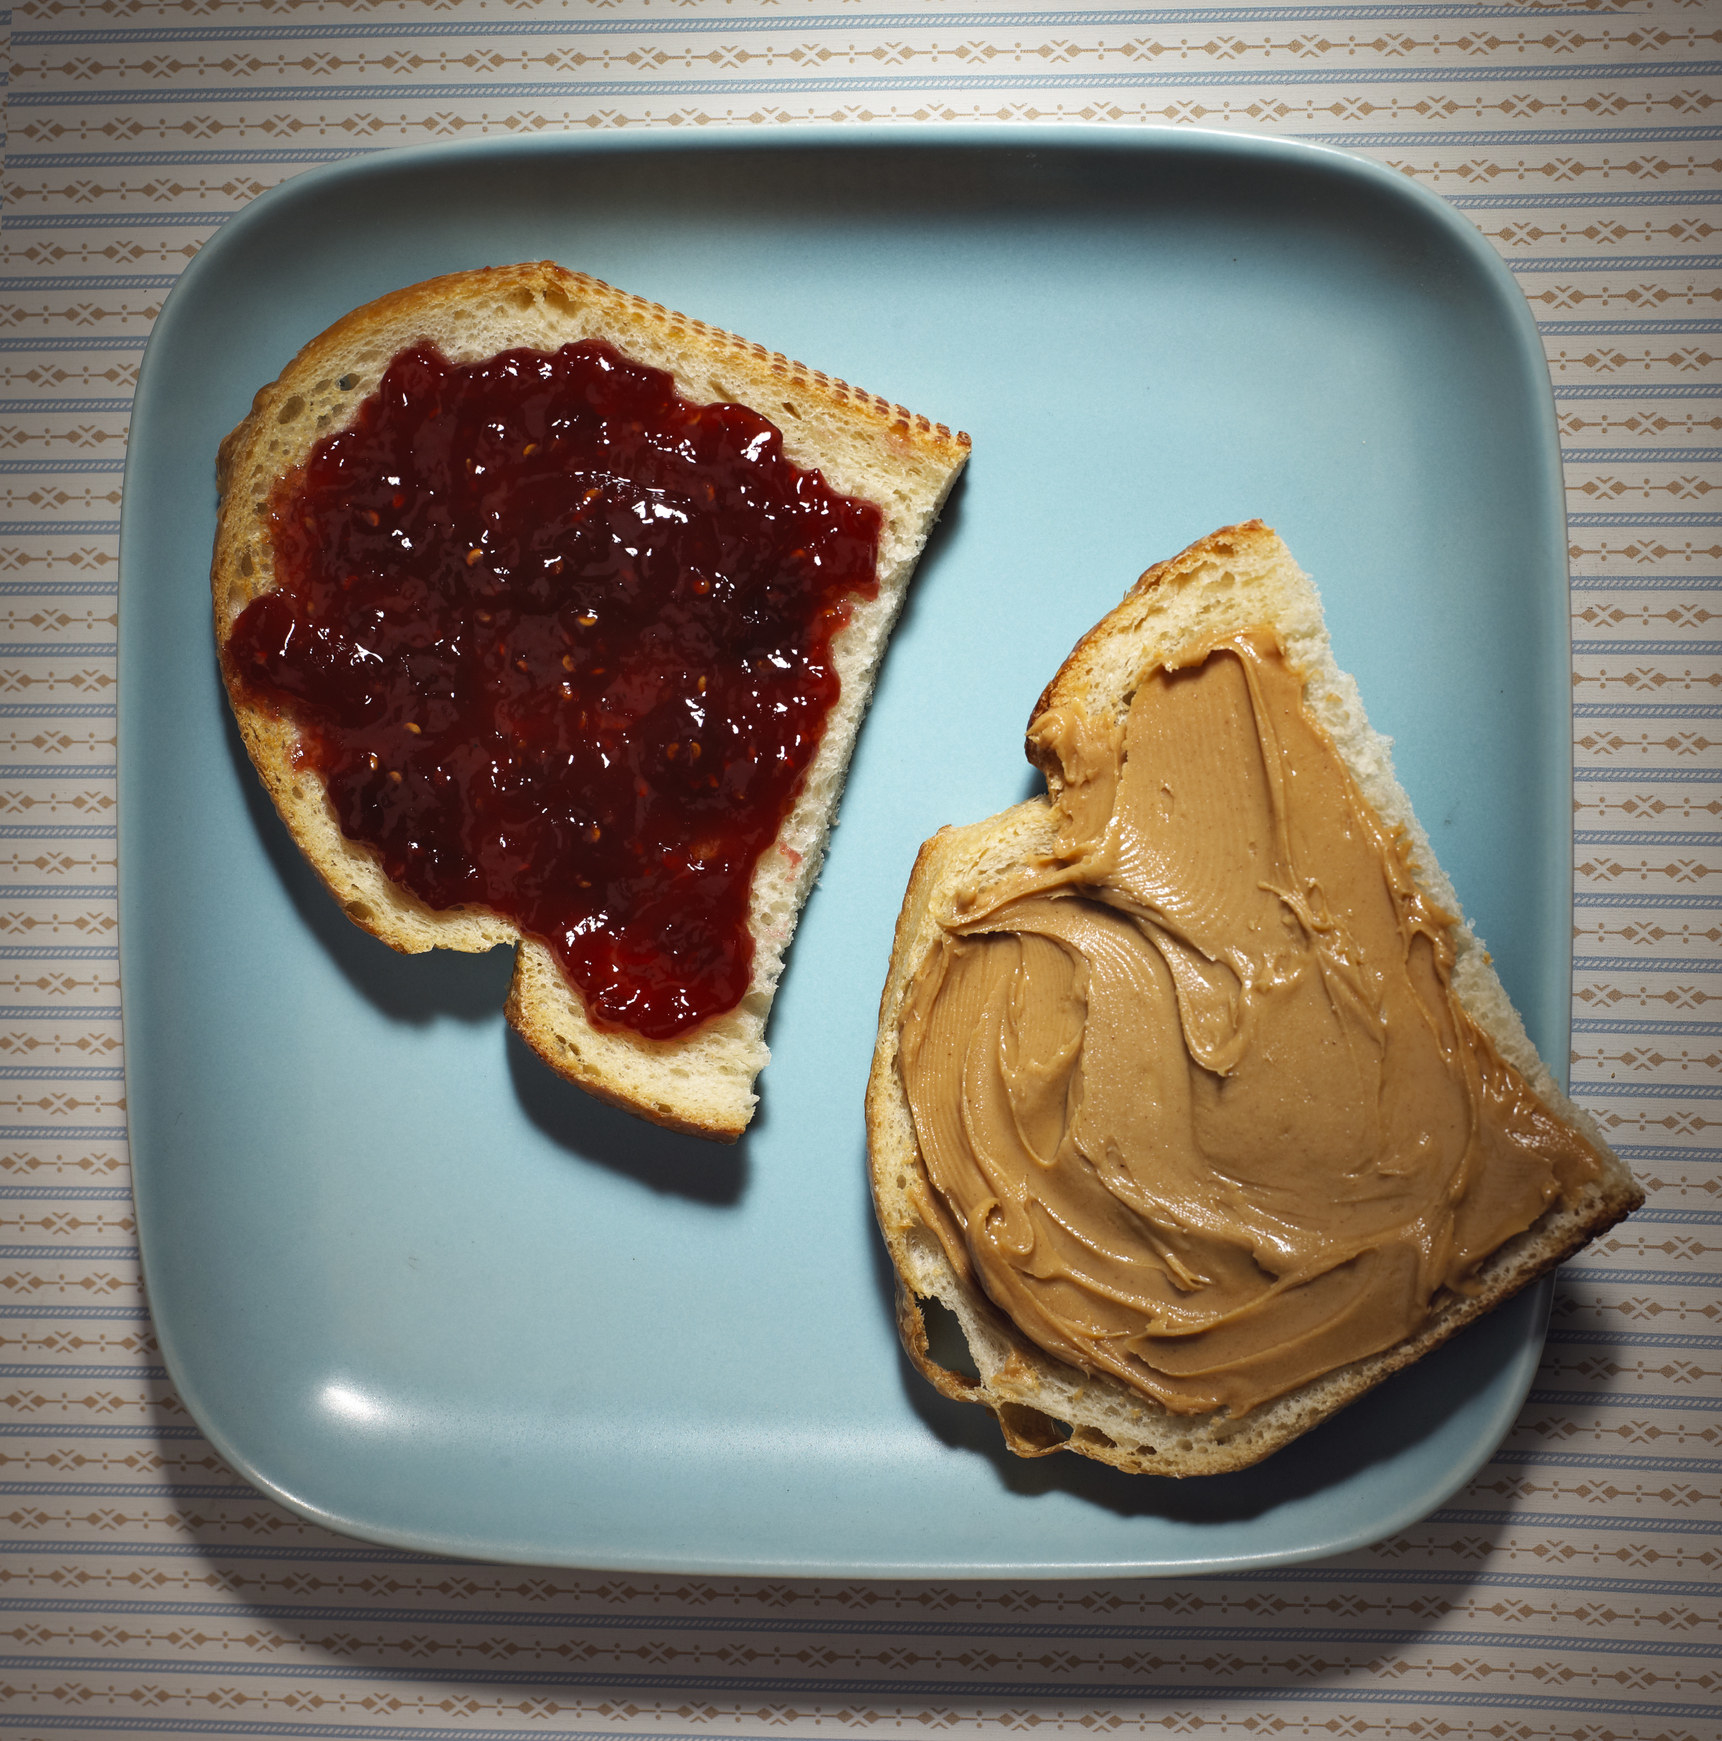 Assembling a peanut butter and jelly sandwich.